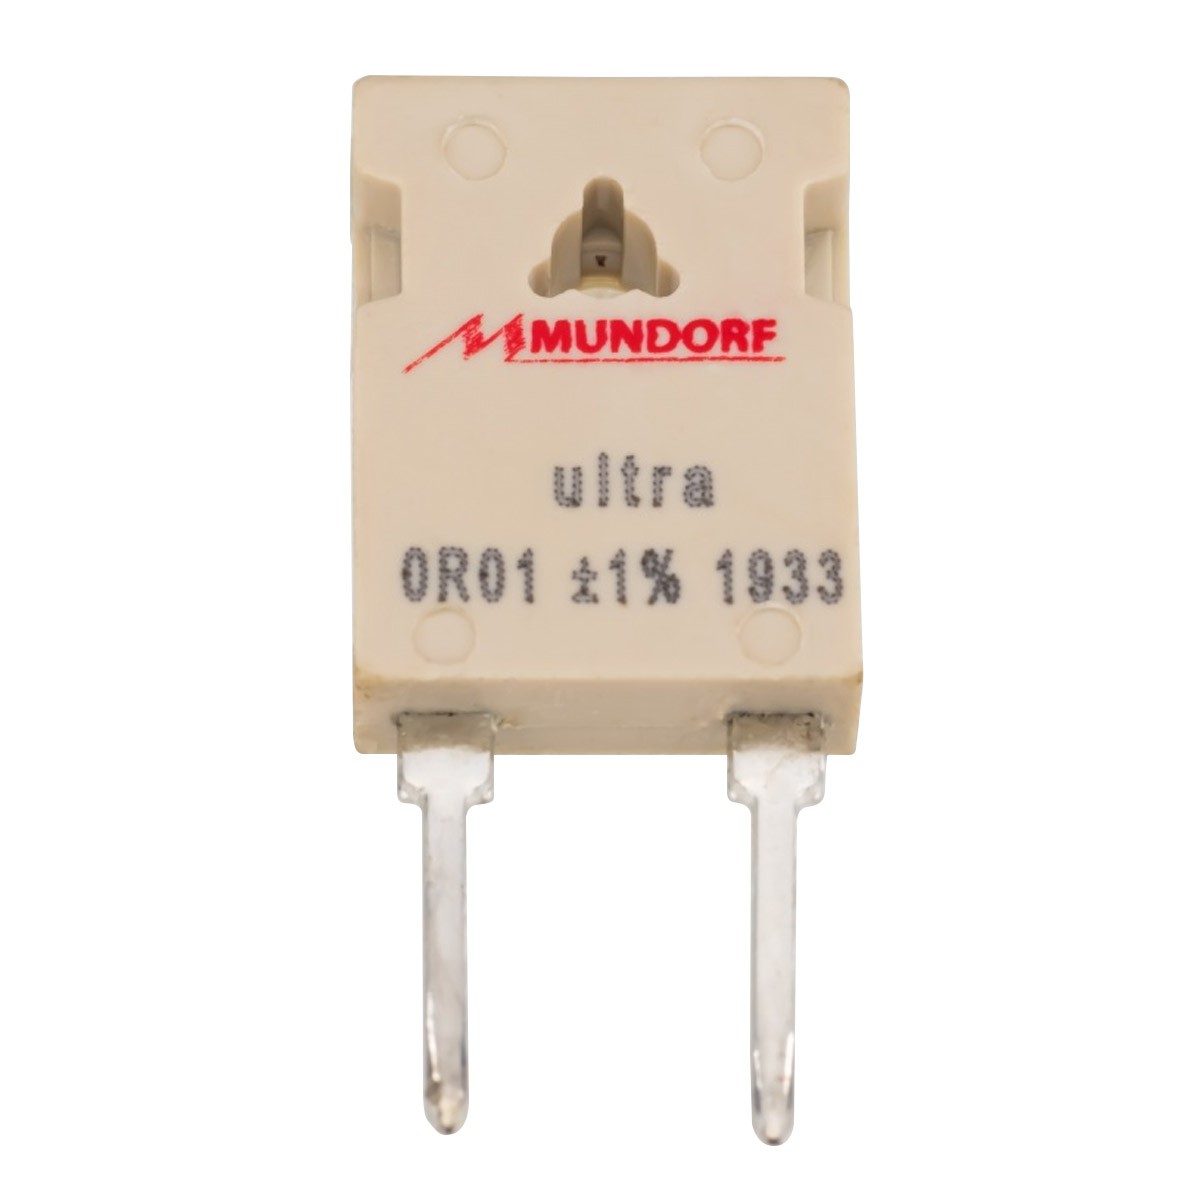 MUNDORF MRESIST ULTRA Resistor 30W 0.15 Ohm